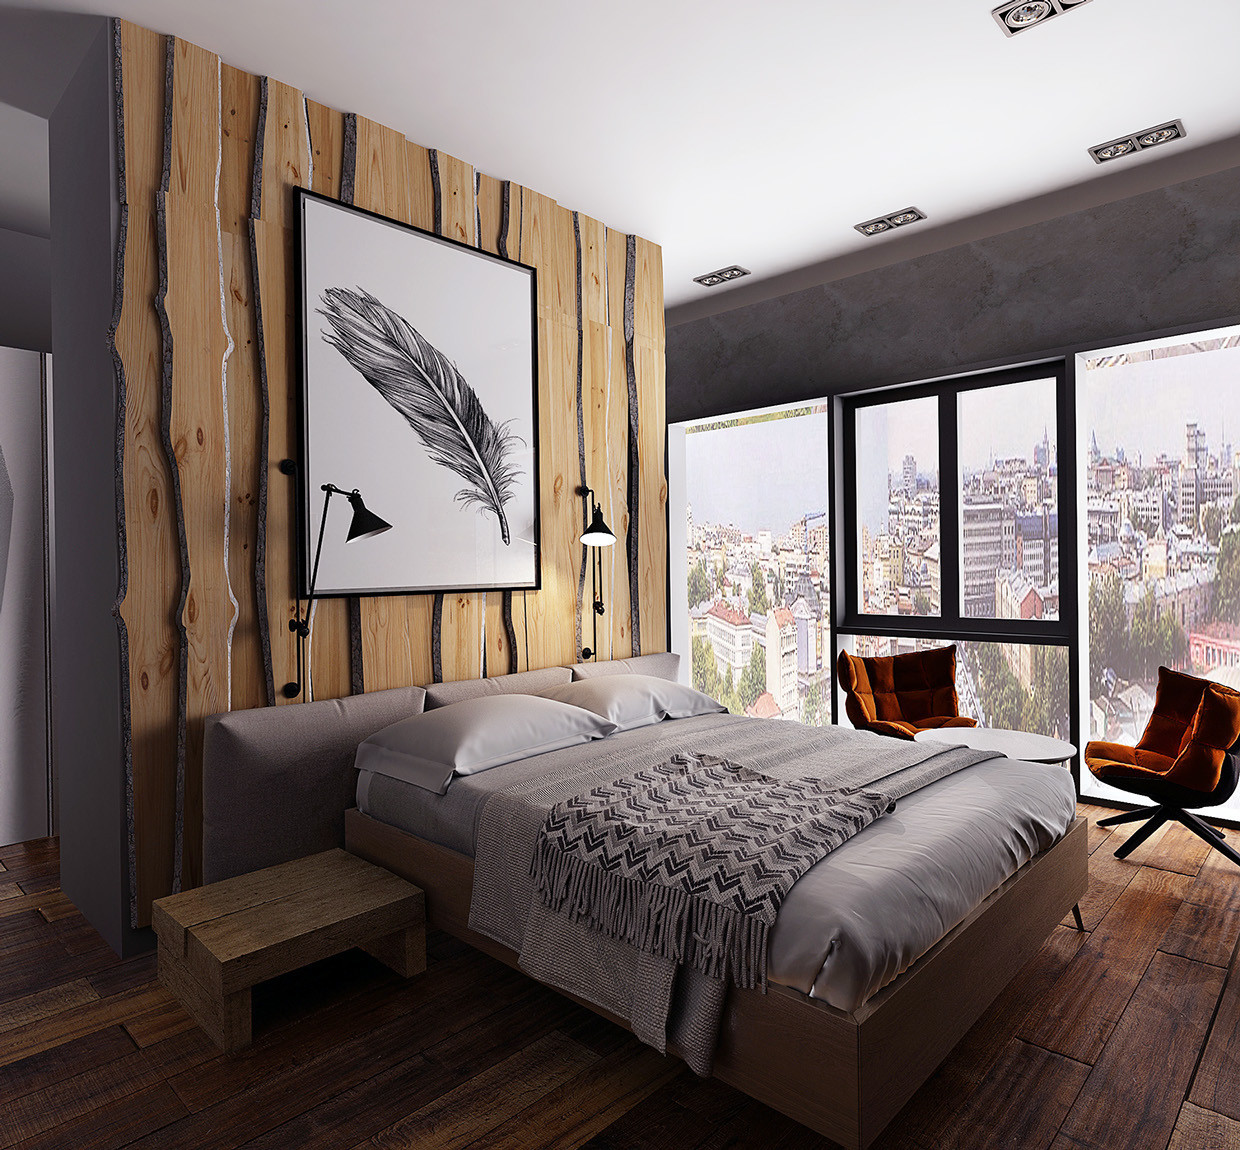 Rustic Industrial Bedroom Unique Converted Industrial Spaces Be Es Gorgeous Apartments